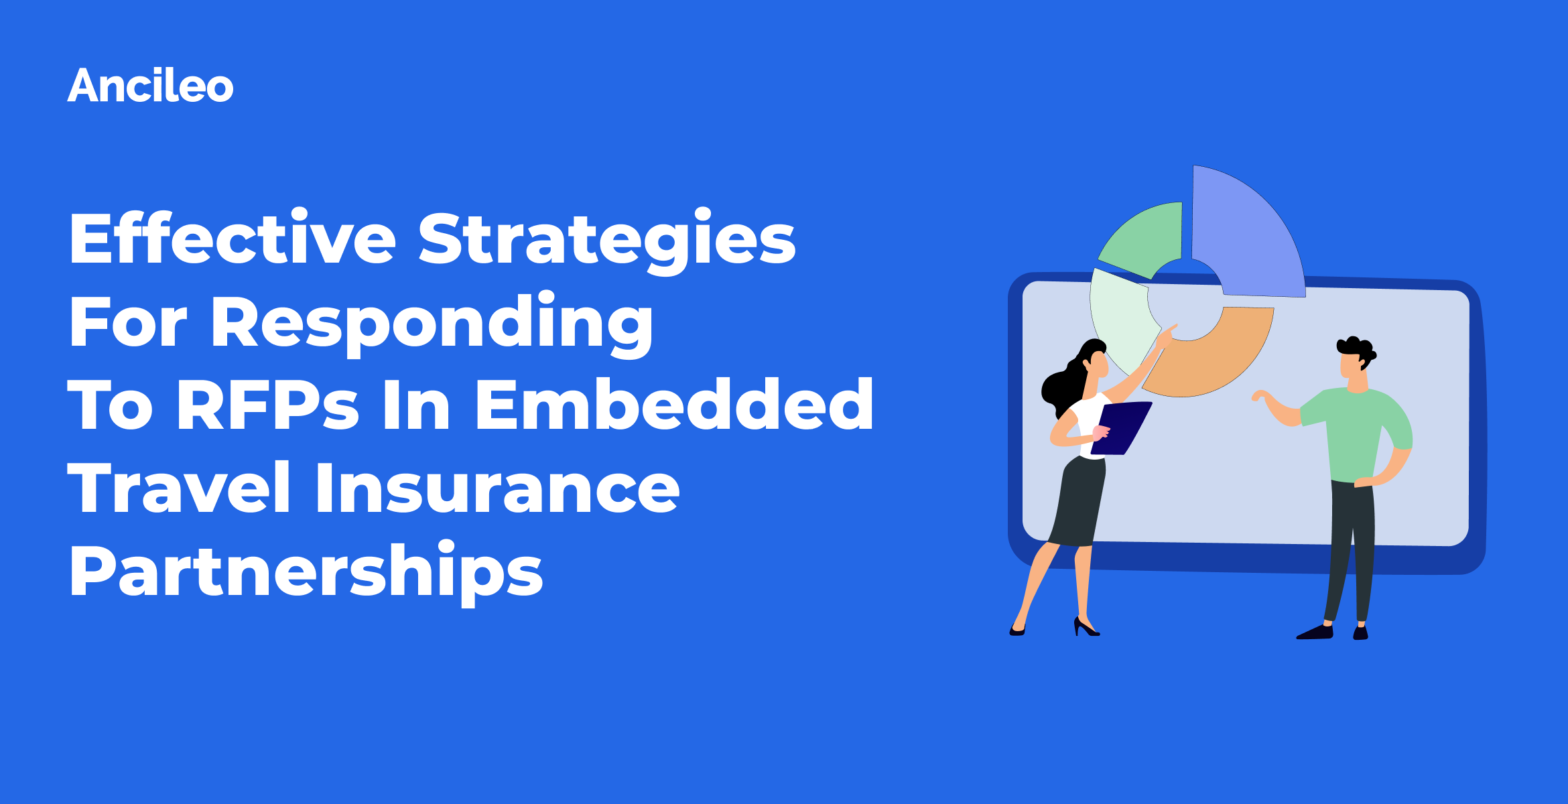 Effective Strategies For Responding To RFPs In Embedded Travel Insurance Partnerships